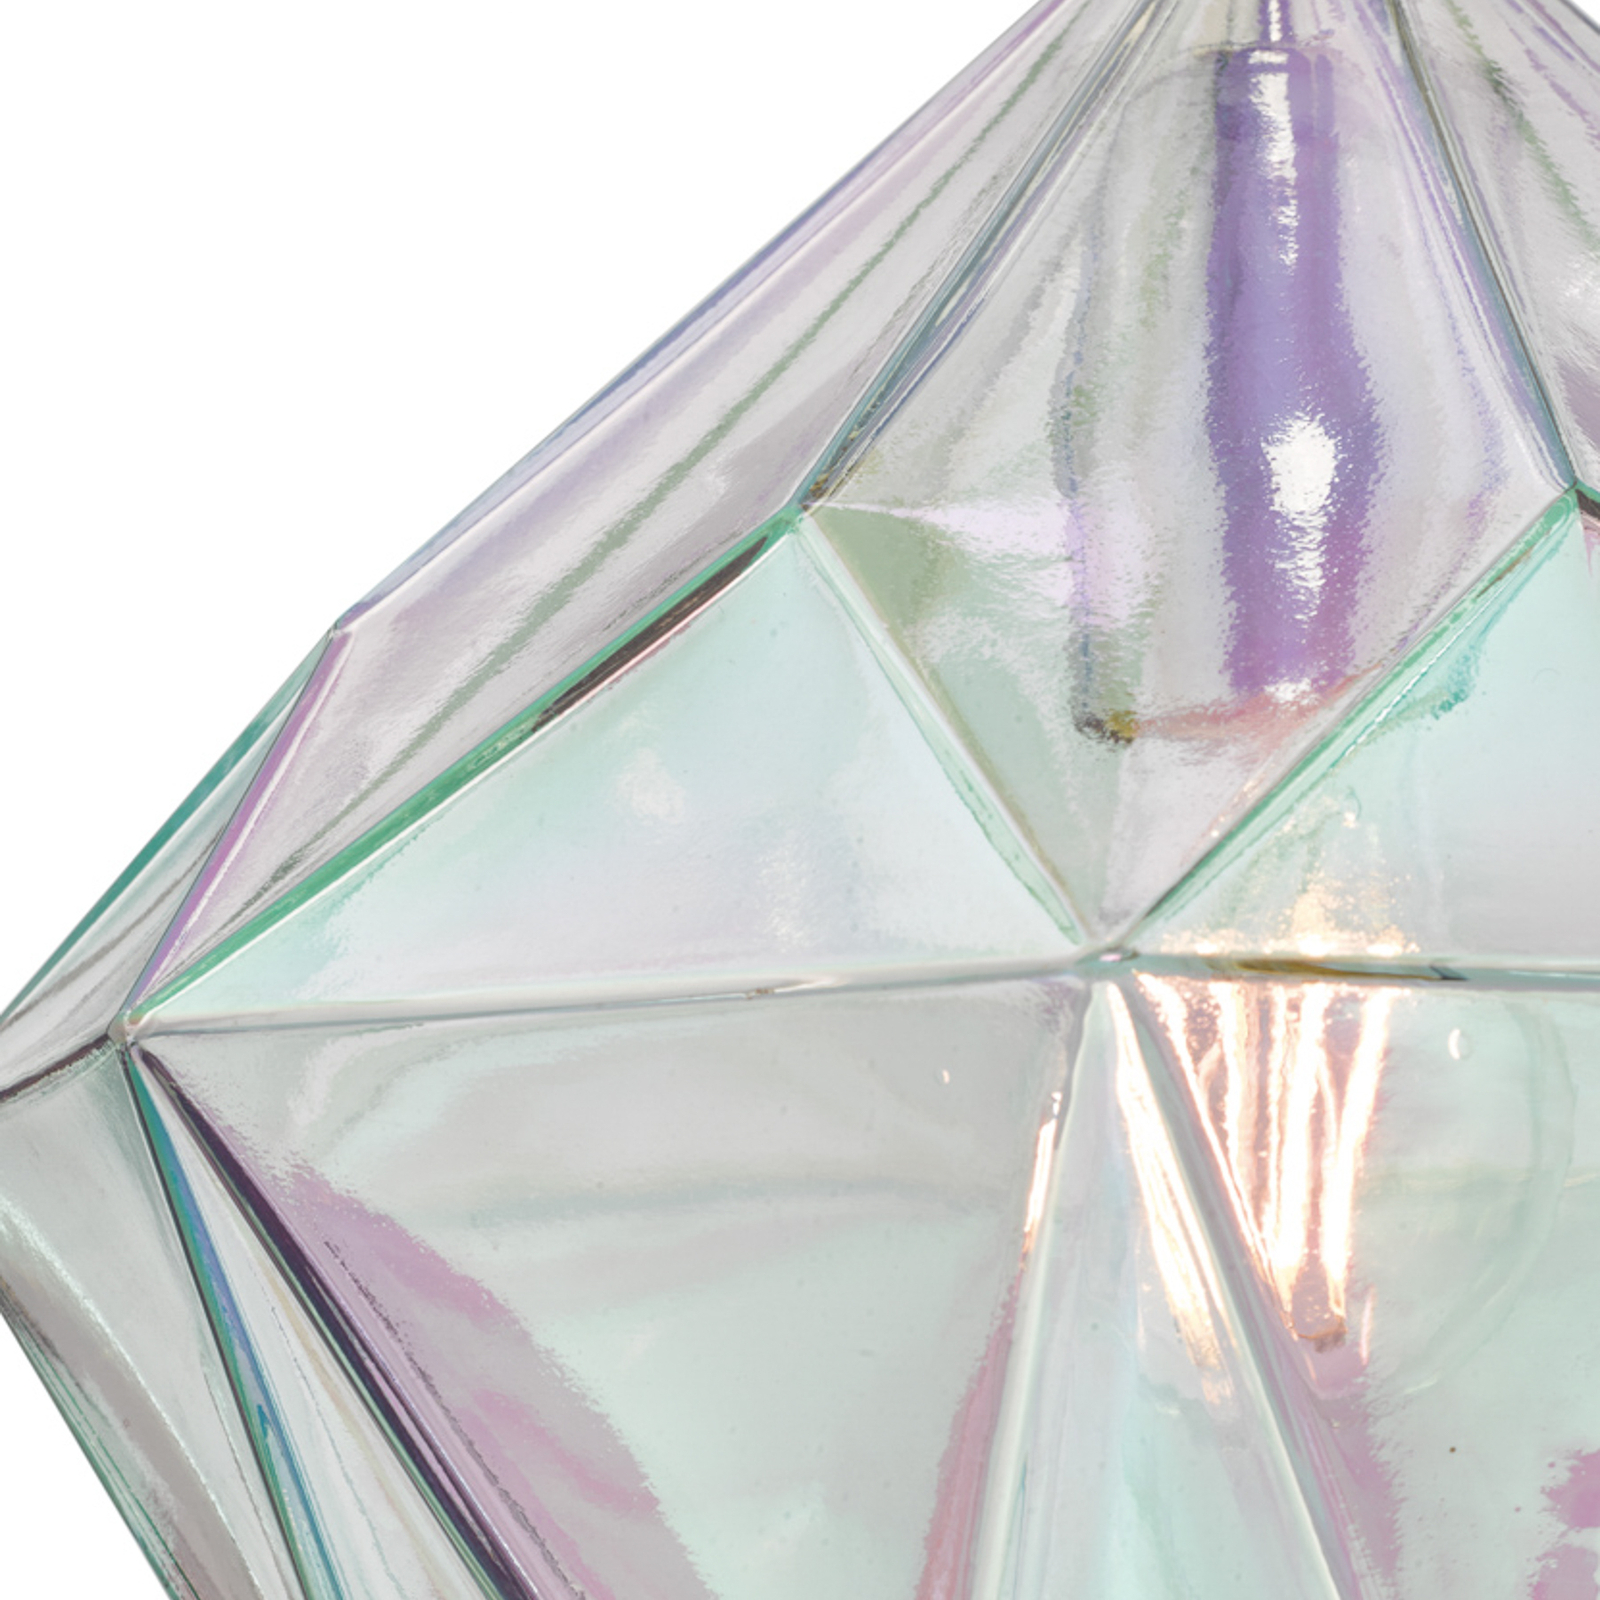 Lámpara colgante Gaia con pantalla de cristal iridiscente